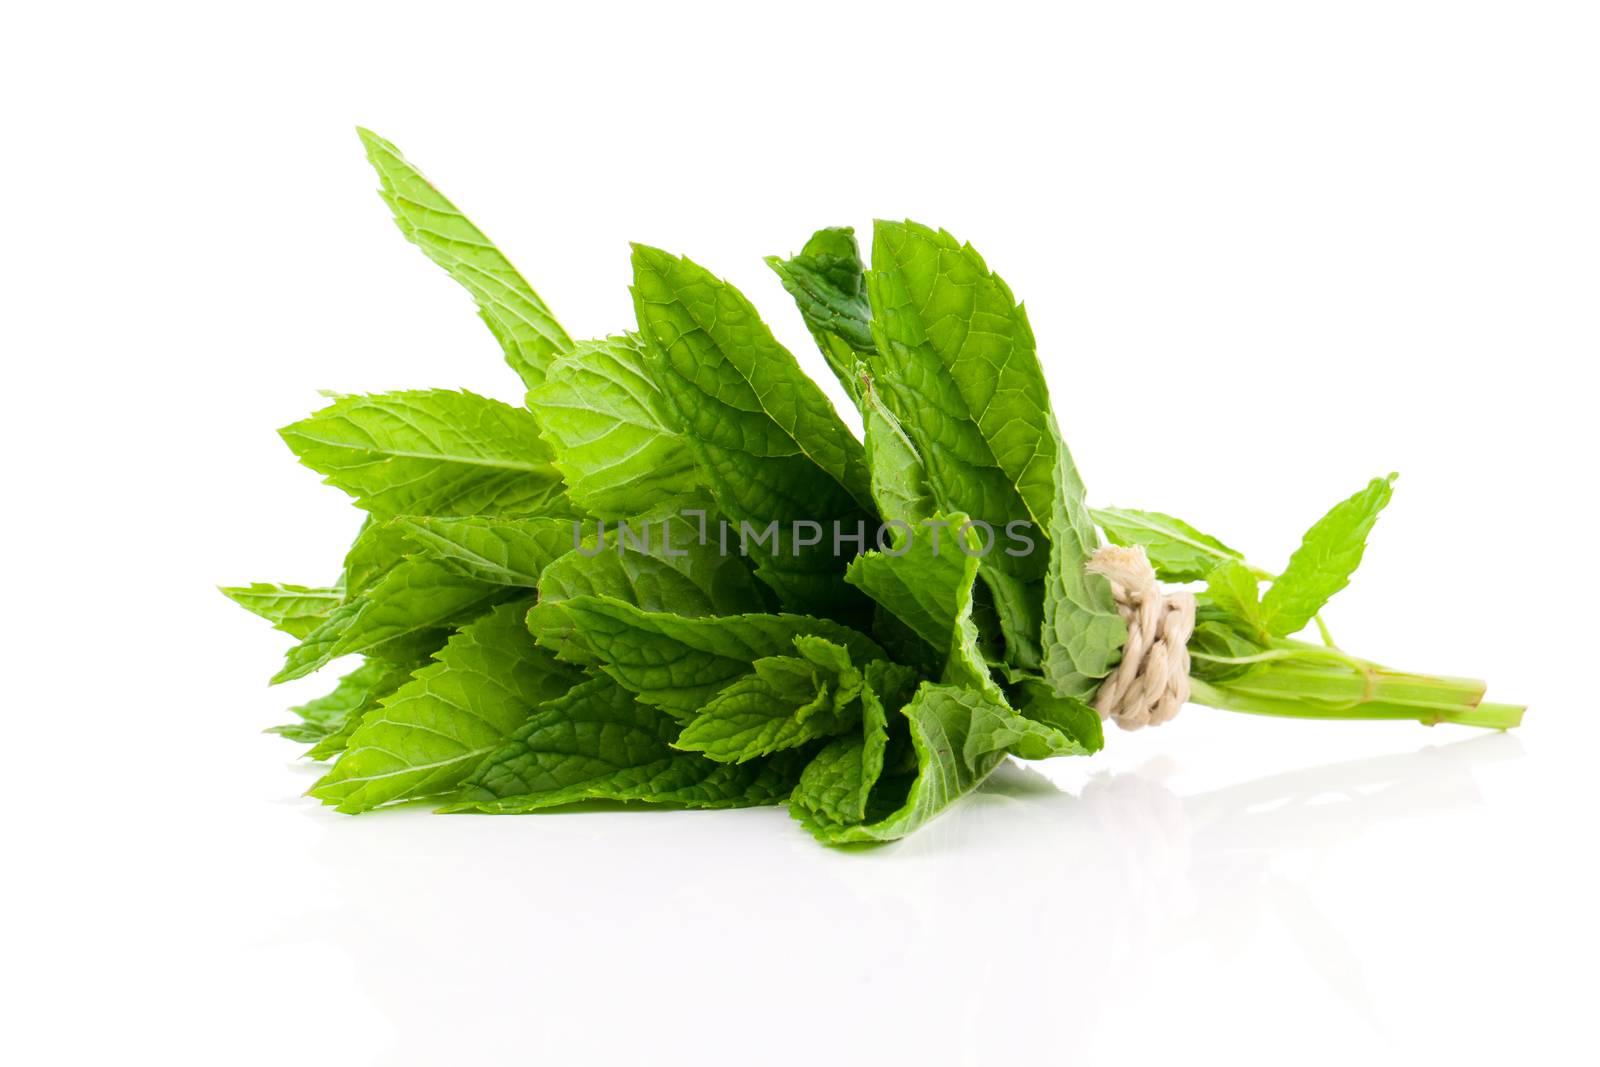 Fresh raw mint leaves isolated on white background by motorolka